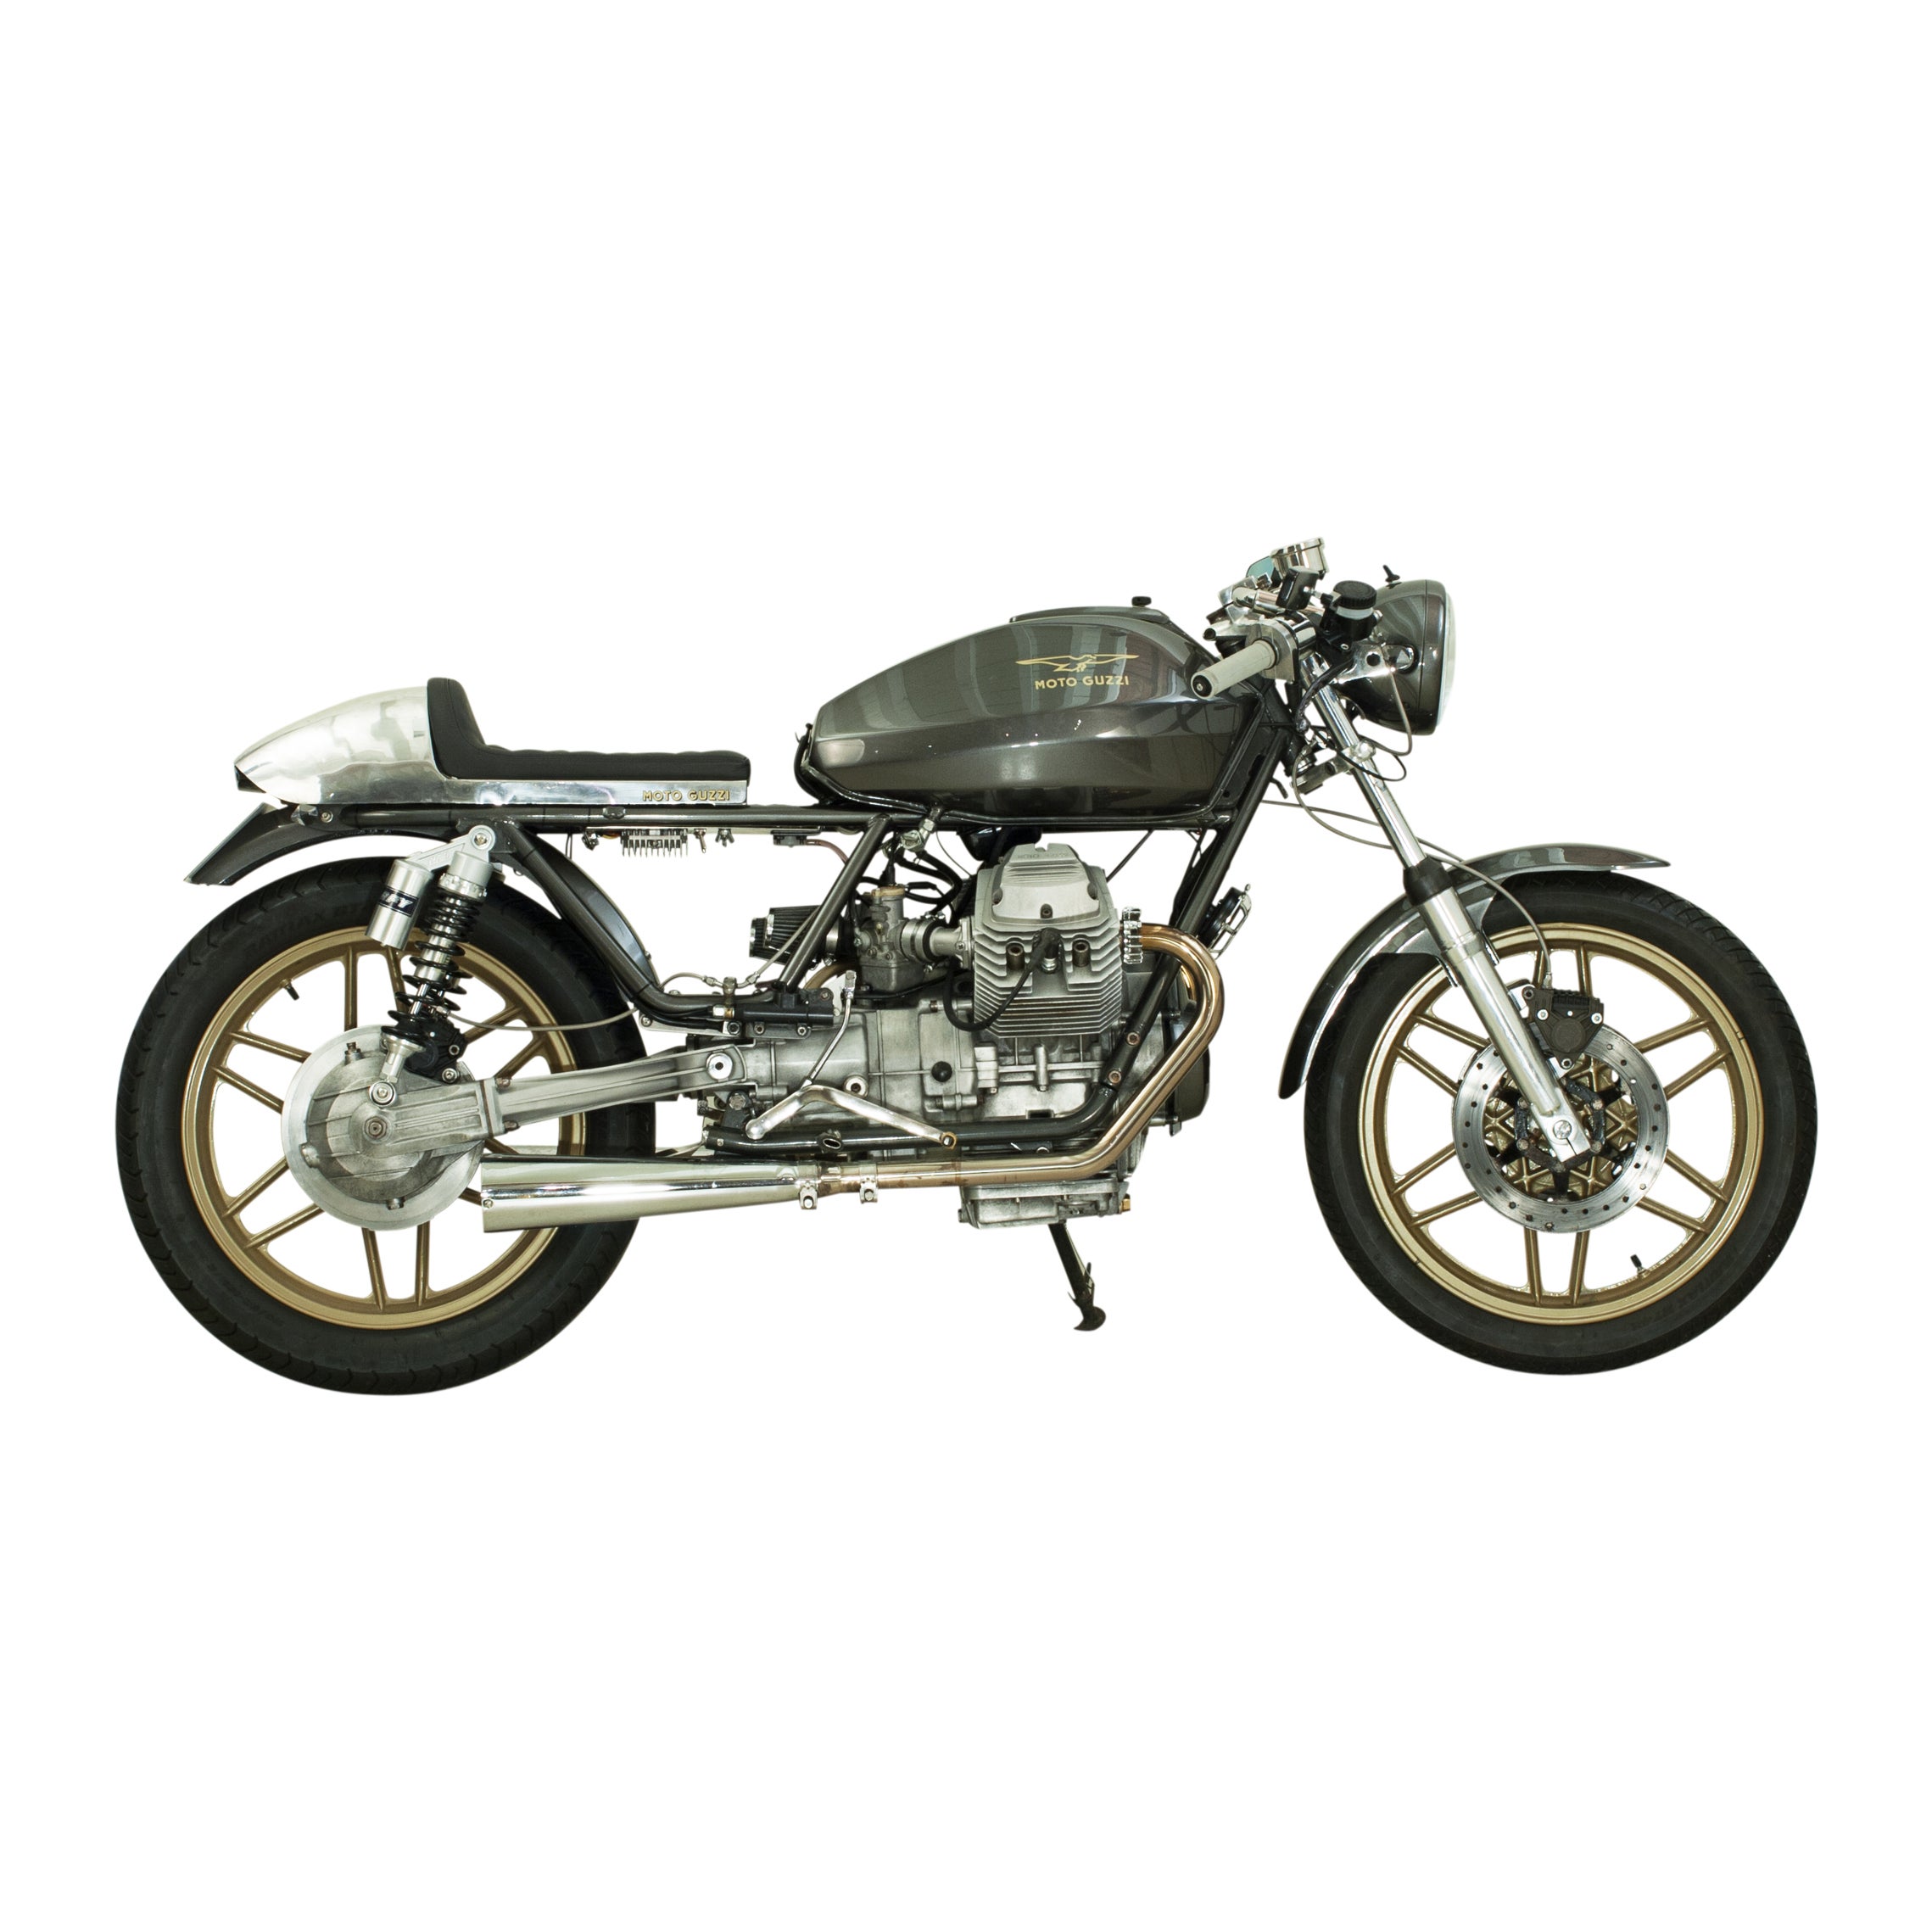 1982 Moto Guzzi Cafe Racer V50 Italian Motorcycle For Sale